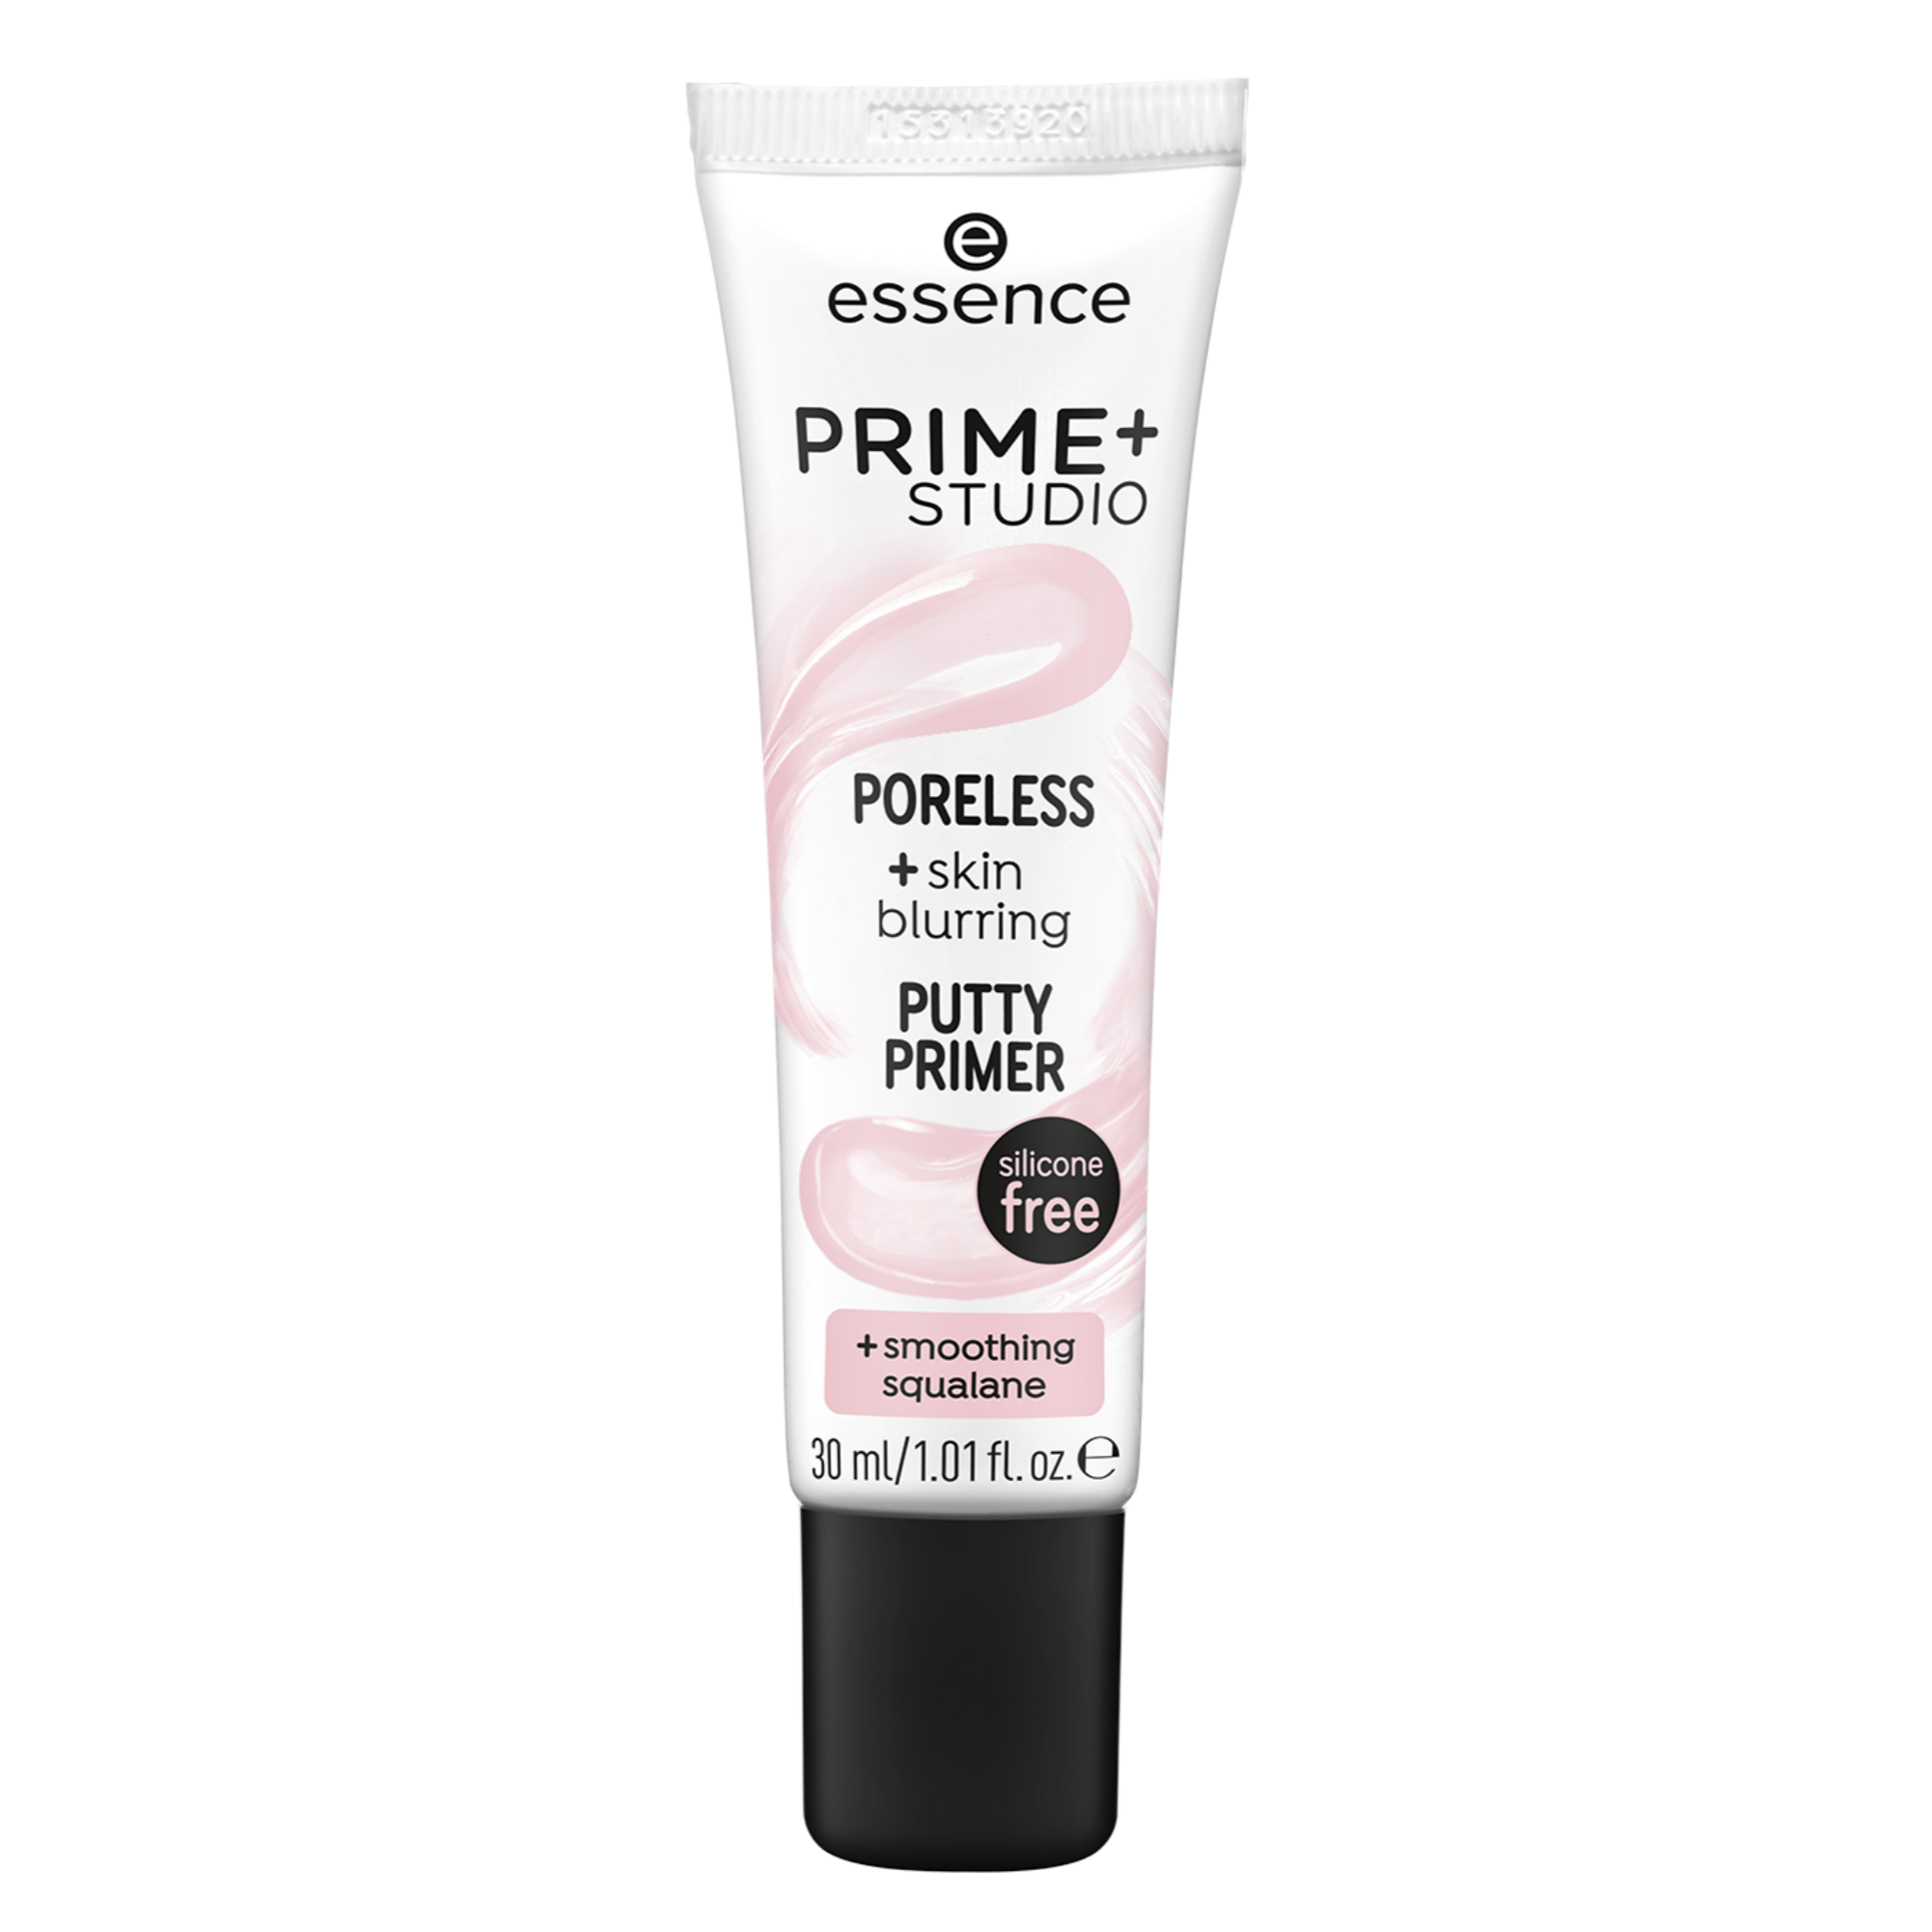 PRIME+ STUDIO PORELESS +skin blurring PUTTY PRIMER